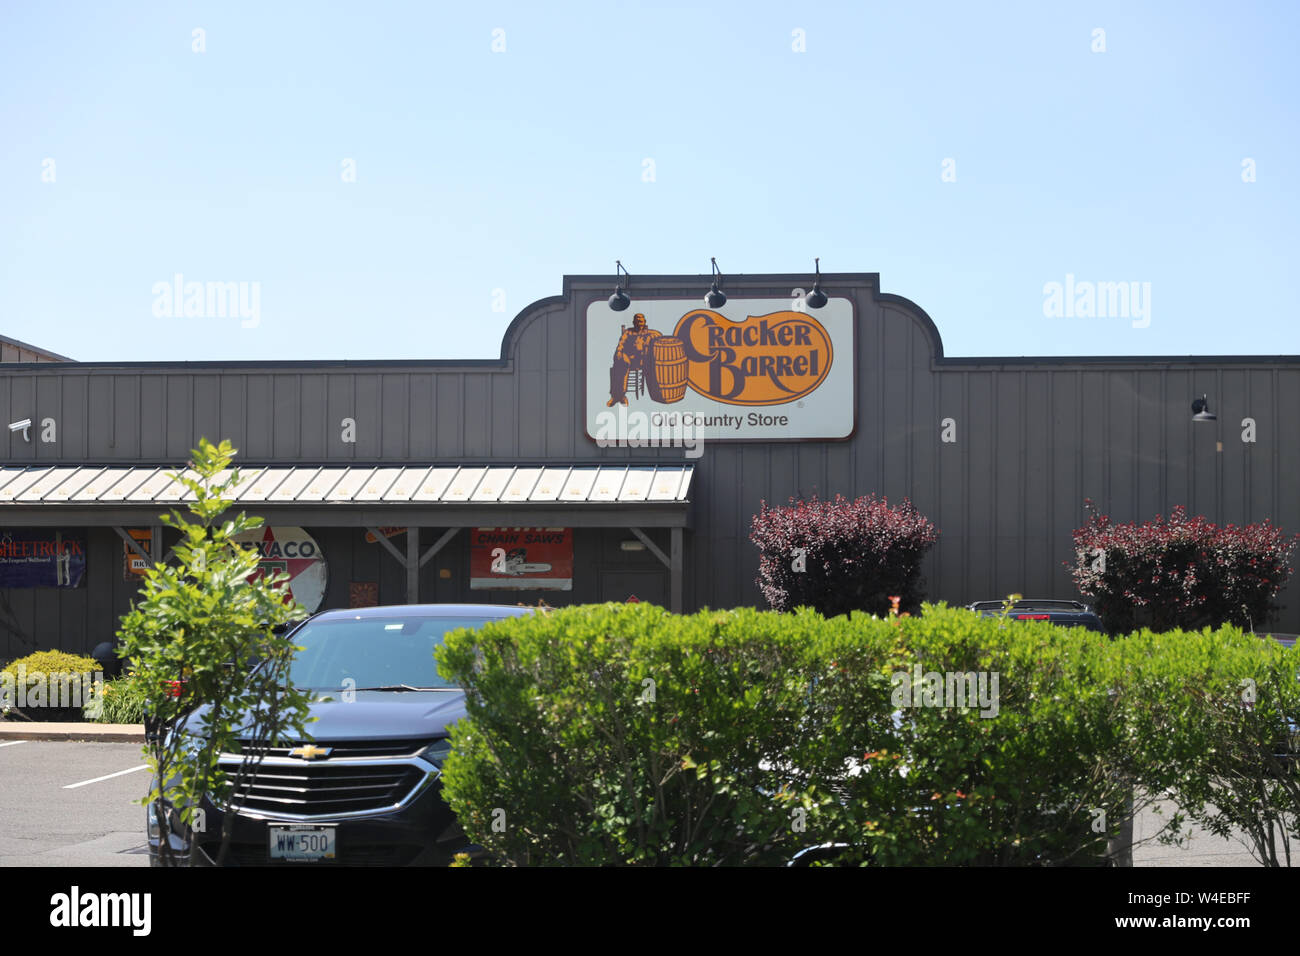 Princeton New Jersey - June 23, 2019: Cracker Barrel Old Country Store Location. Cracker Barrel Serves Homestyle Food V - Image Stock Photo